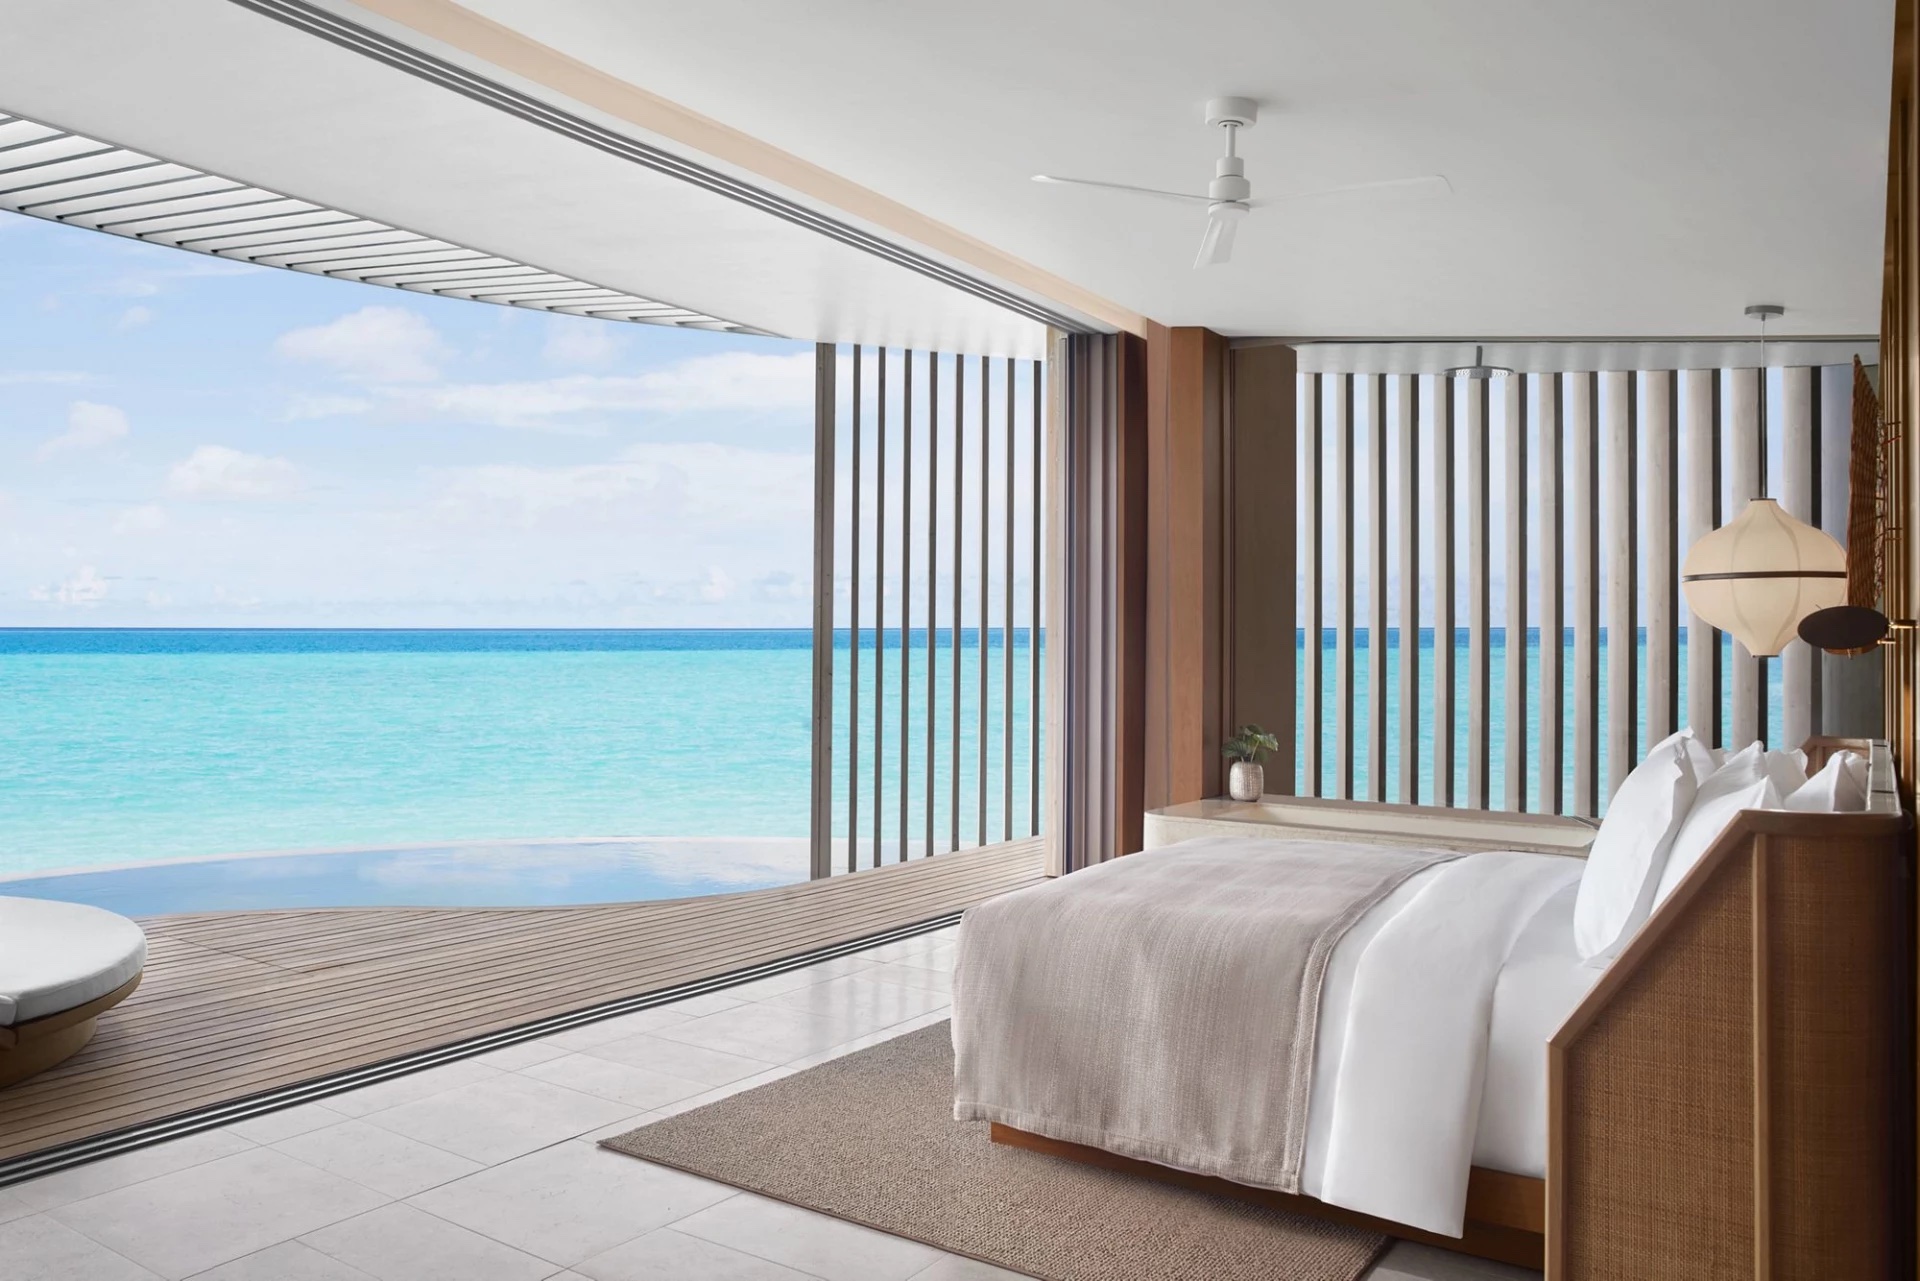 The Ritz-Carlton Maldives, Fari Islands - Ocean Pool Villa